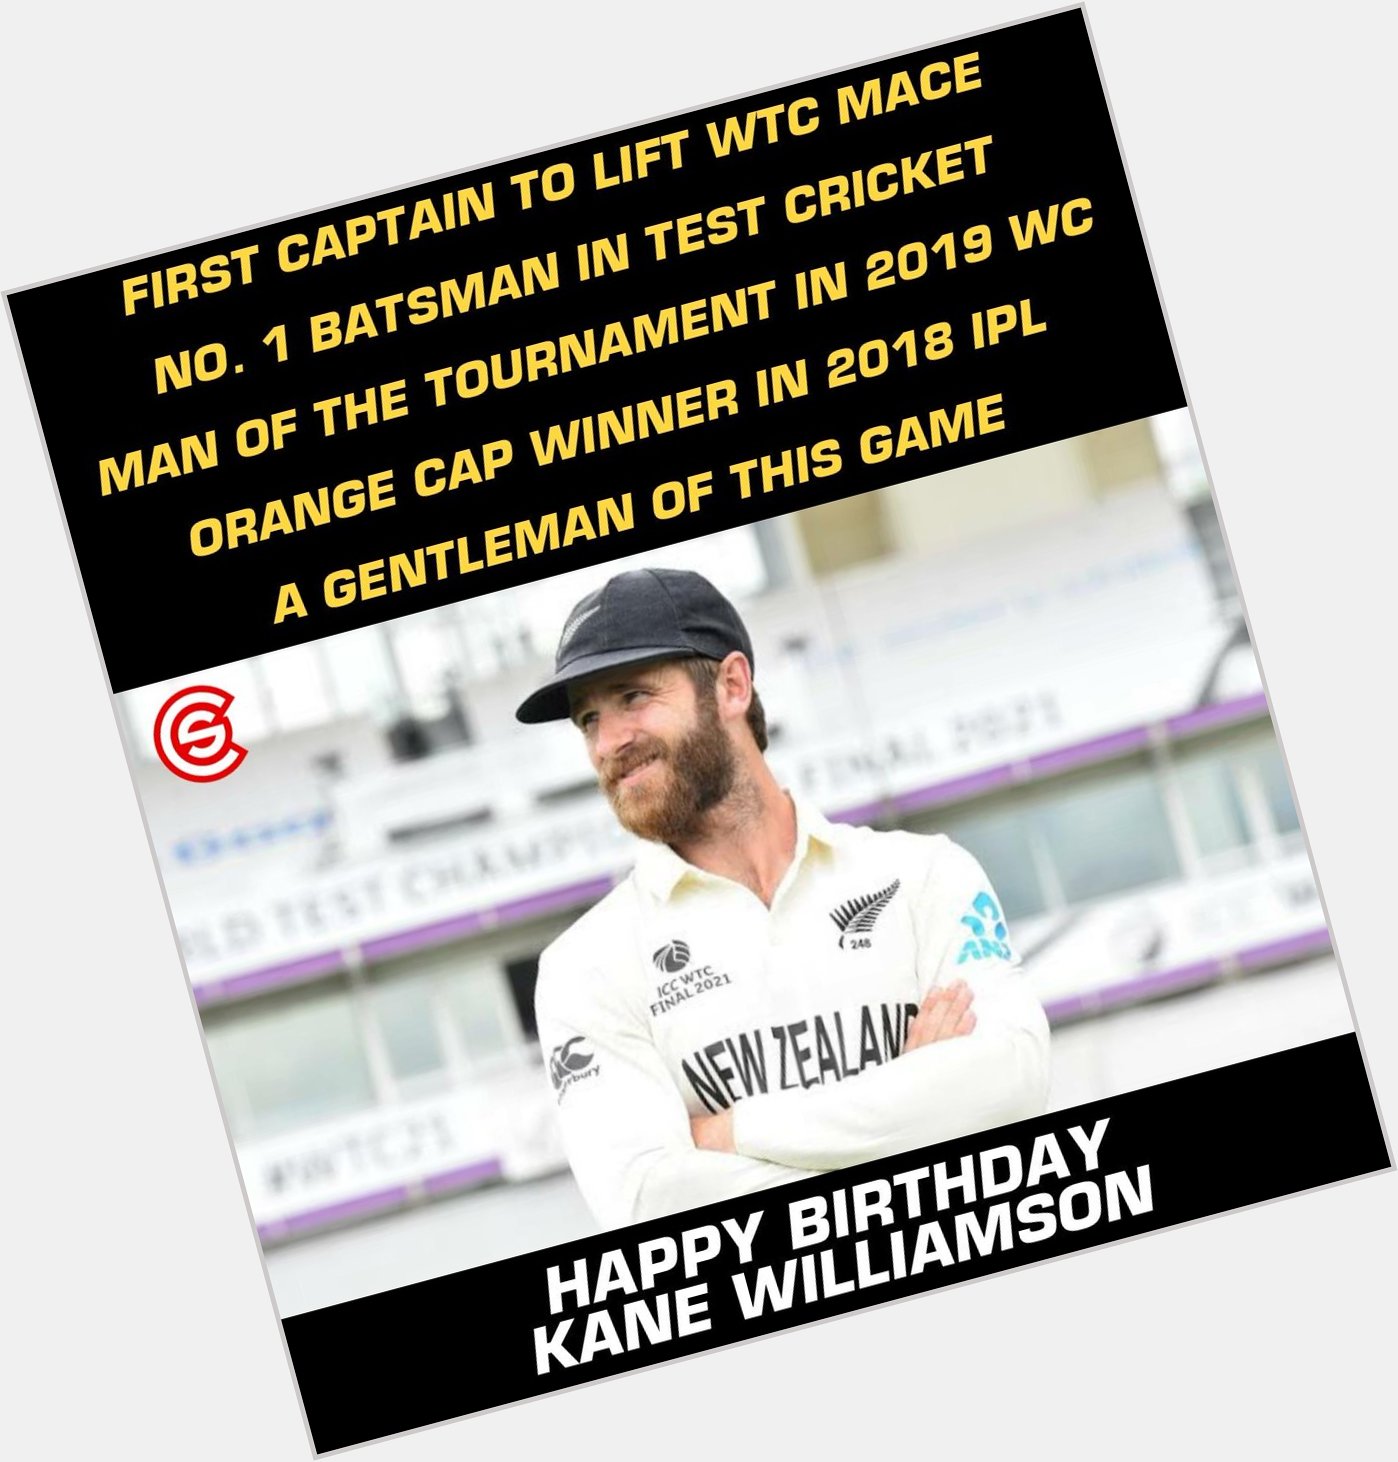 Happy Birthday to Kane Williamson!! 